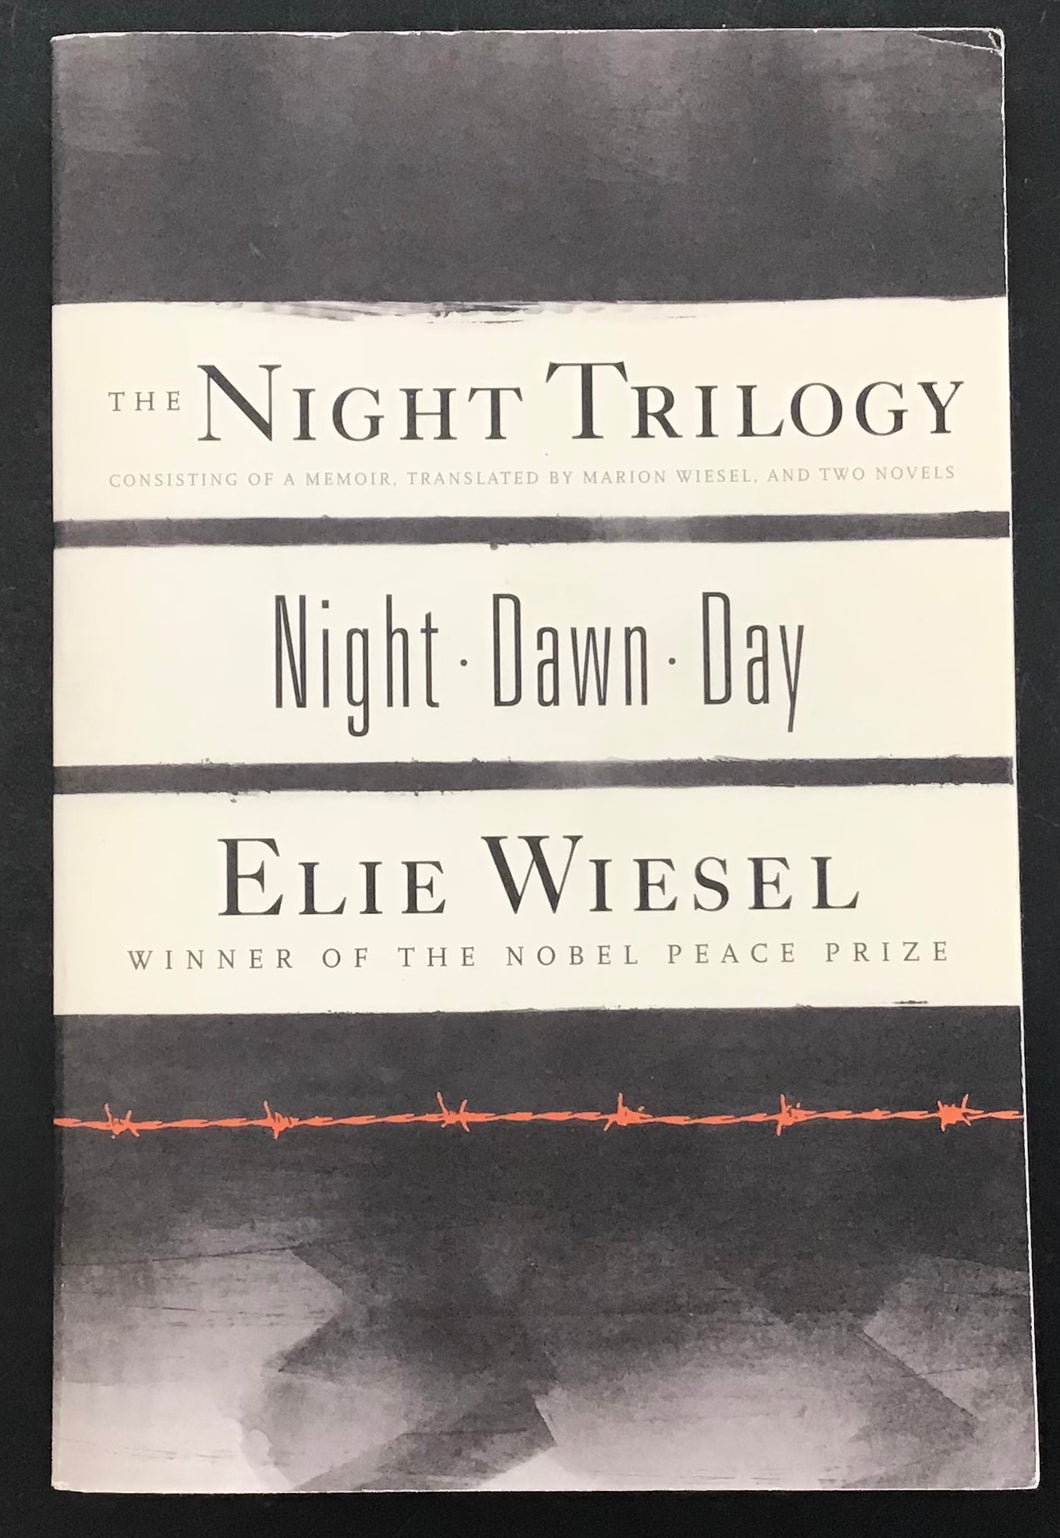 The Night Trilogy, Elie Wiesel